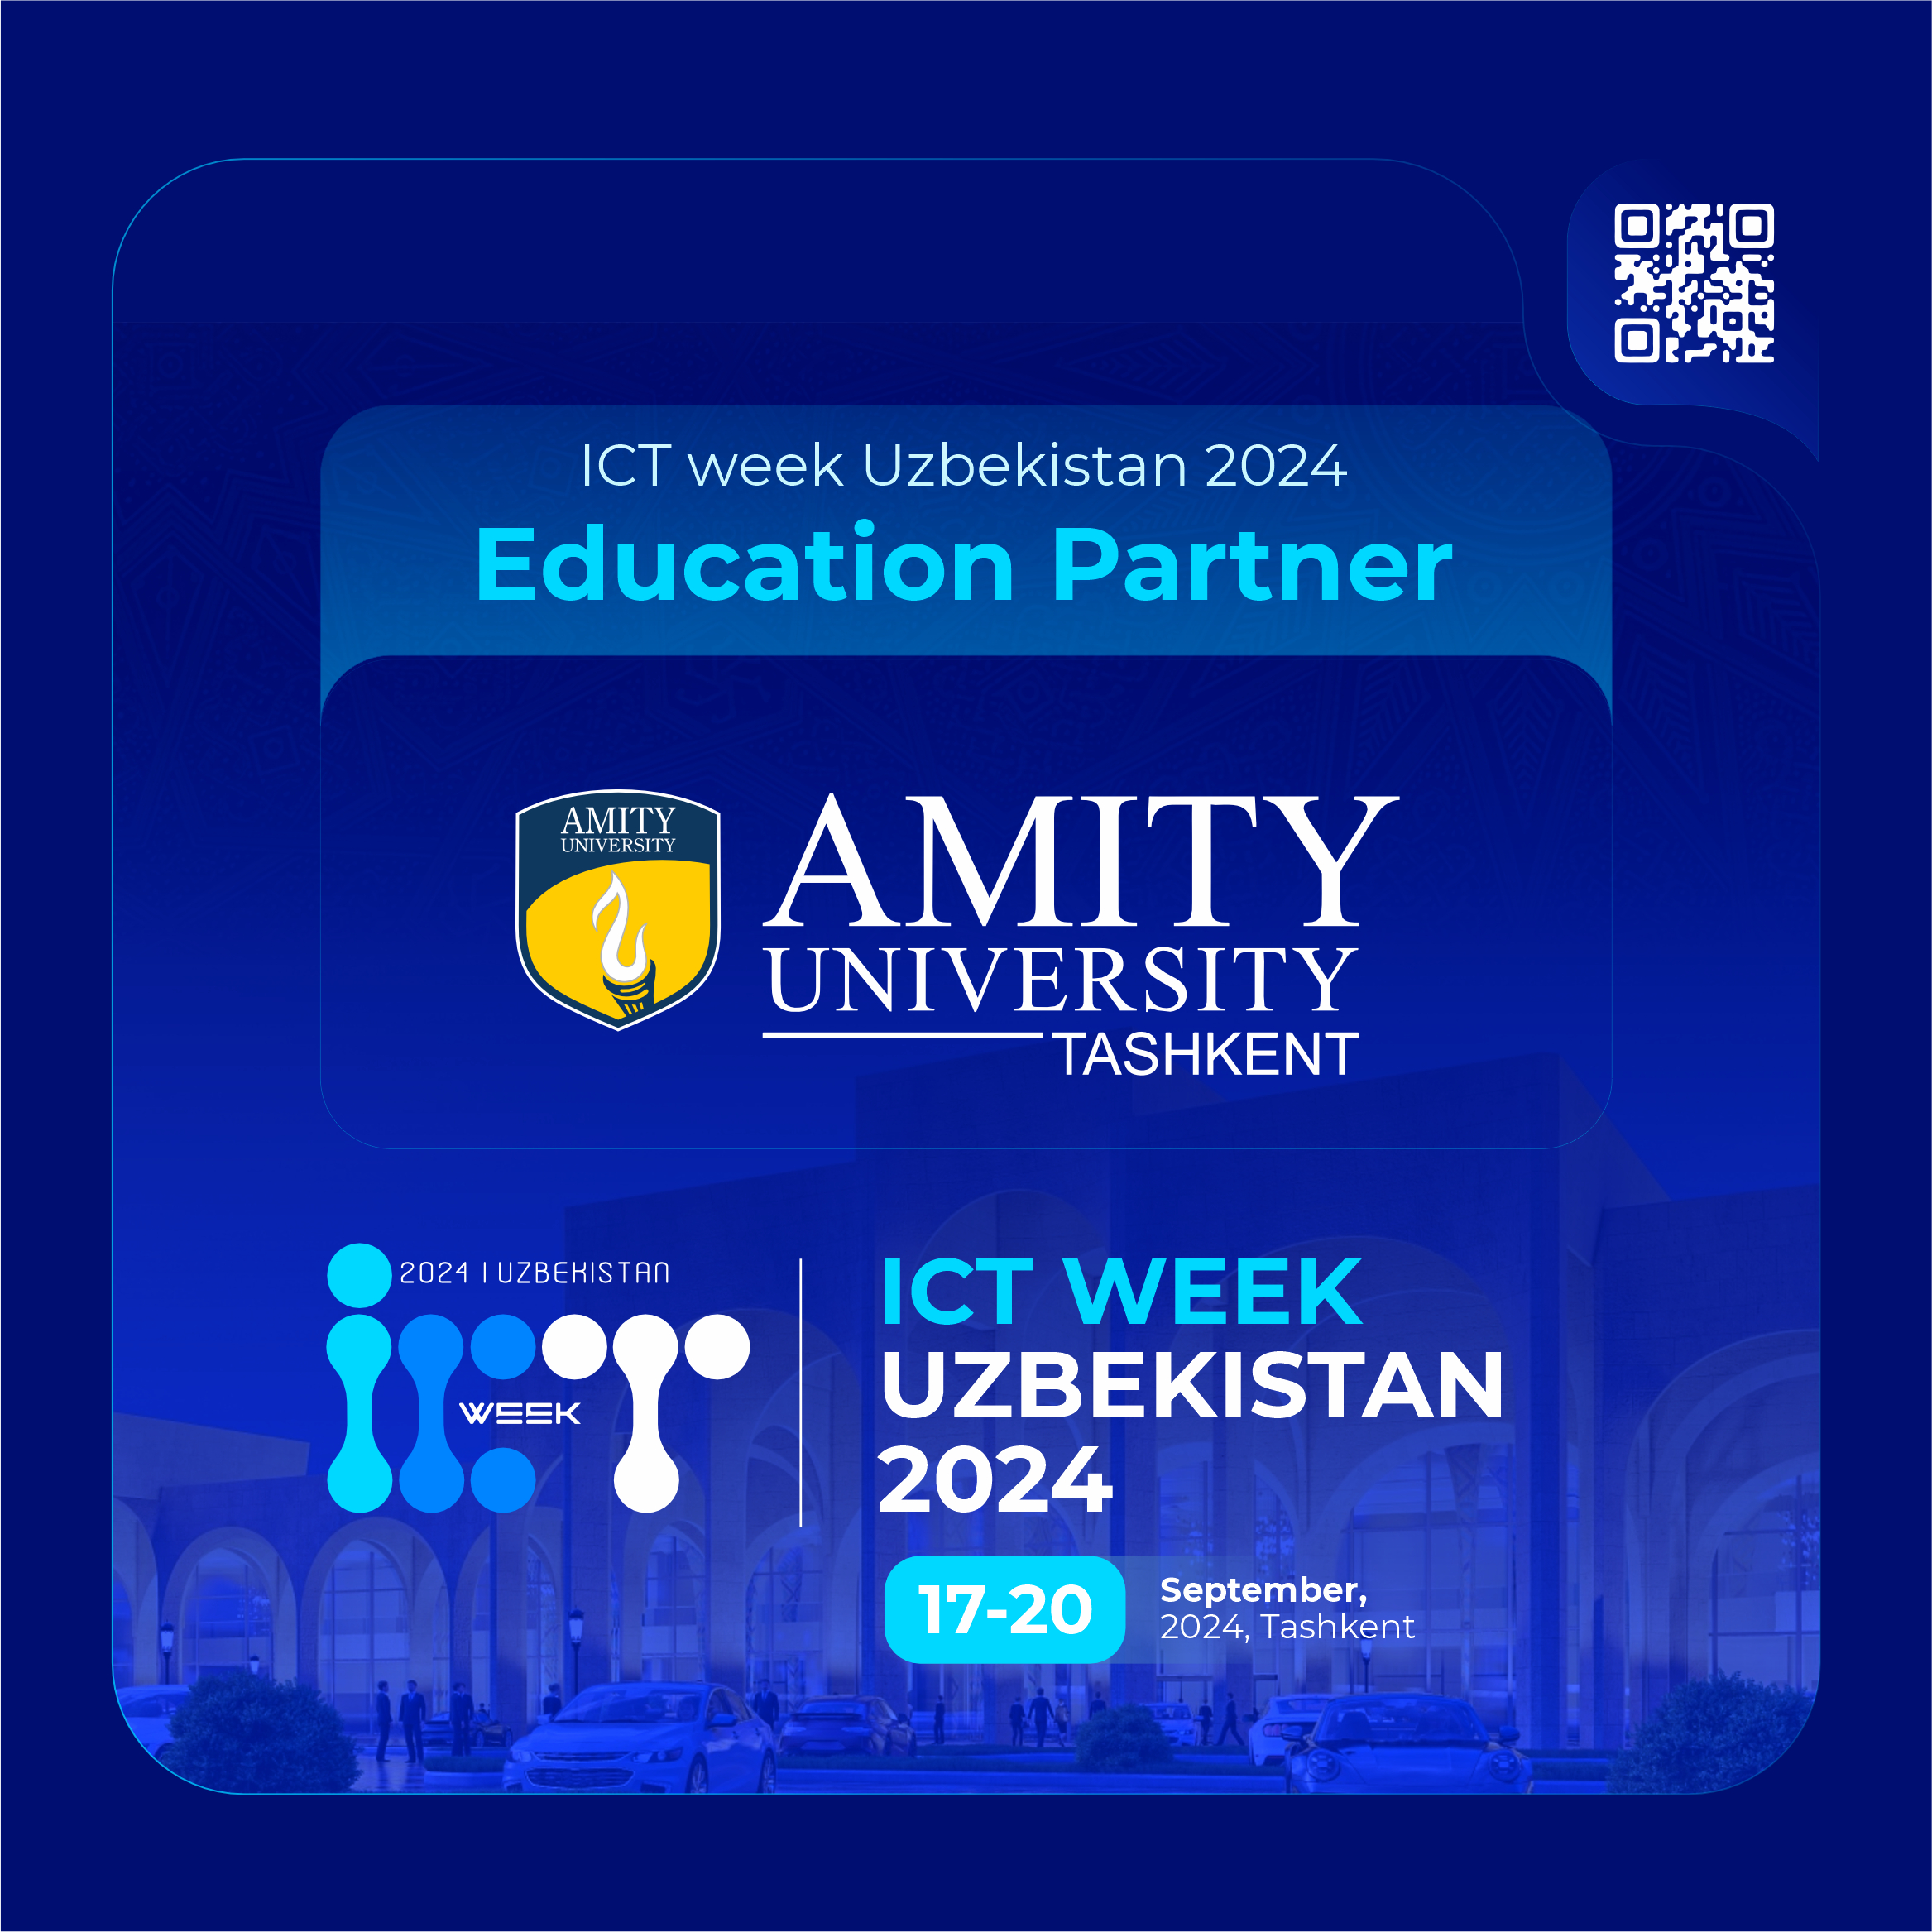 Amity University - Education Partner of ICTWEEK UZBEKISTAN 2024!